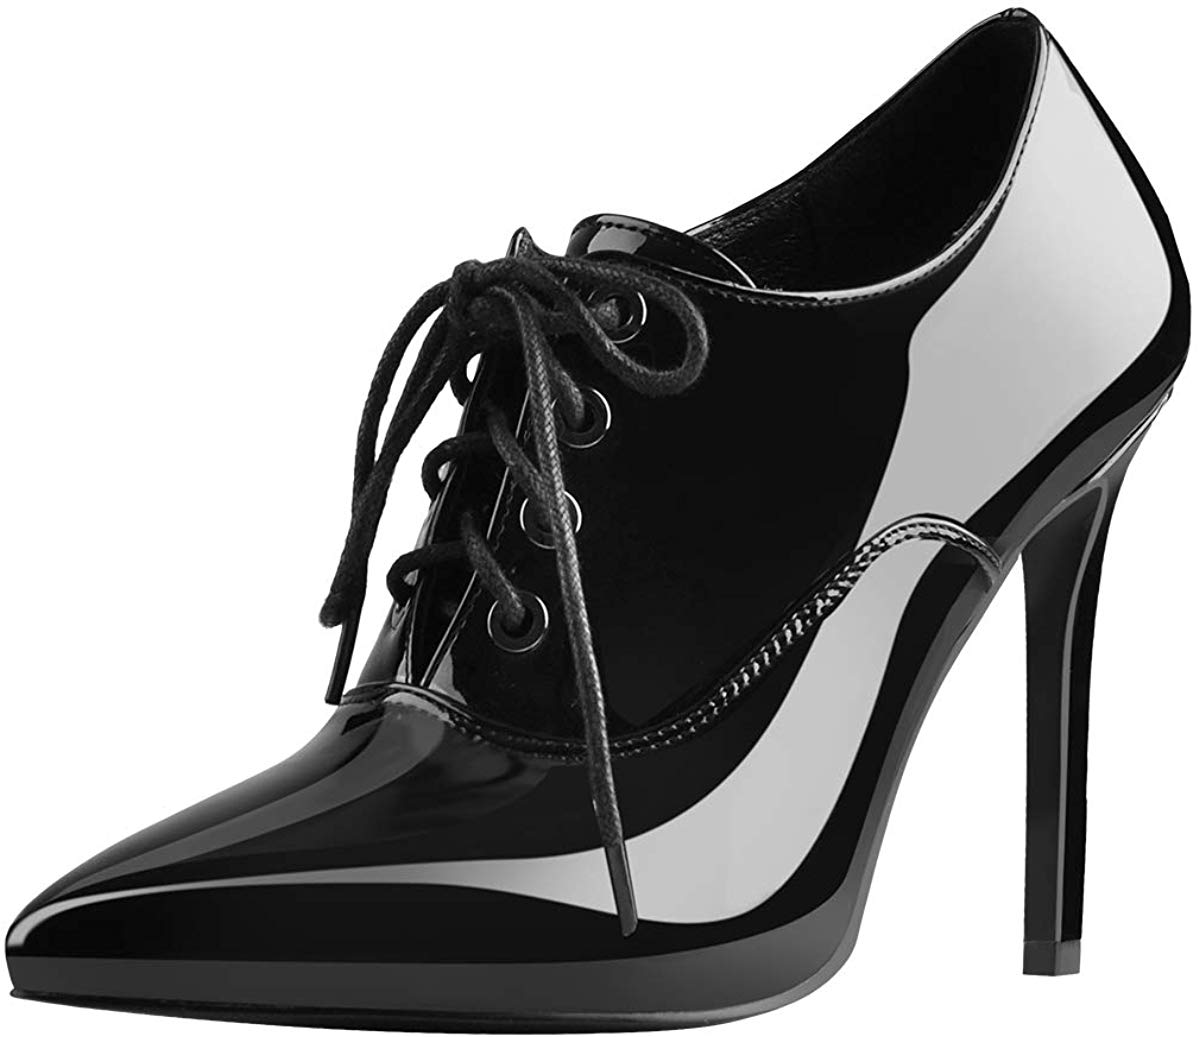 Onlymaker Women Lace Up High Heel Oxfords Pointed Toe Stiletto Basic Pumps Black Ebay